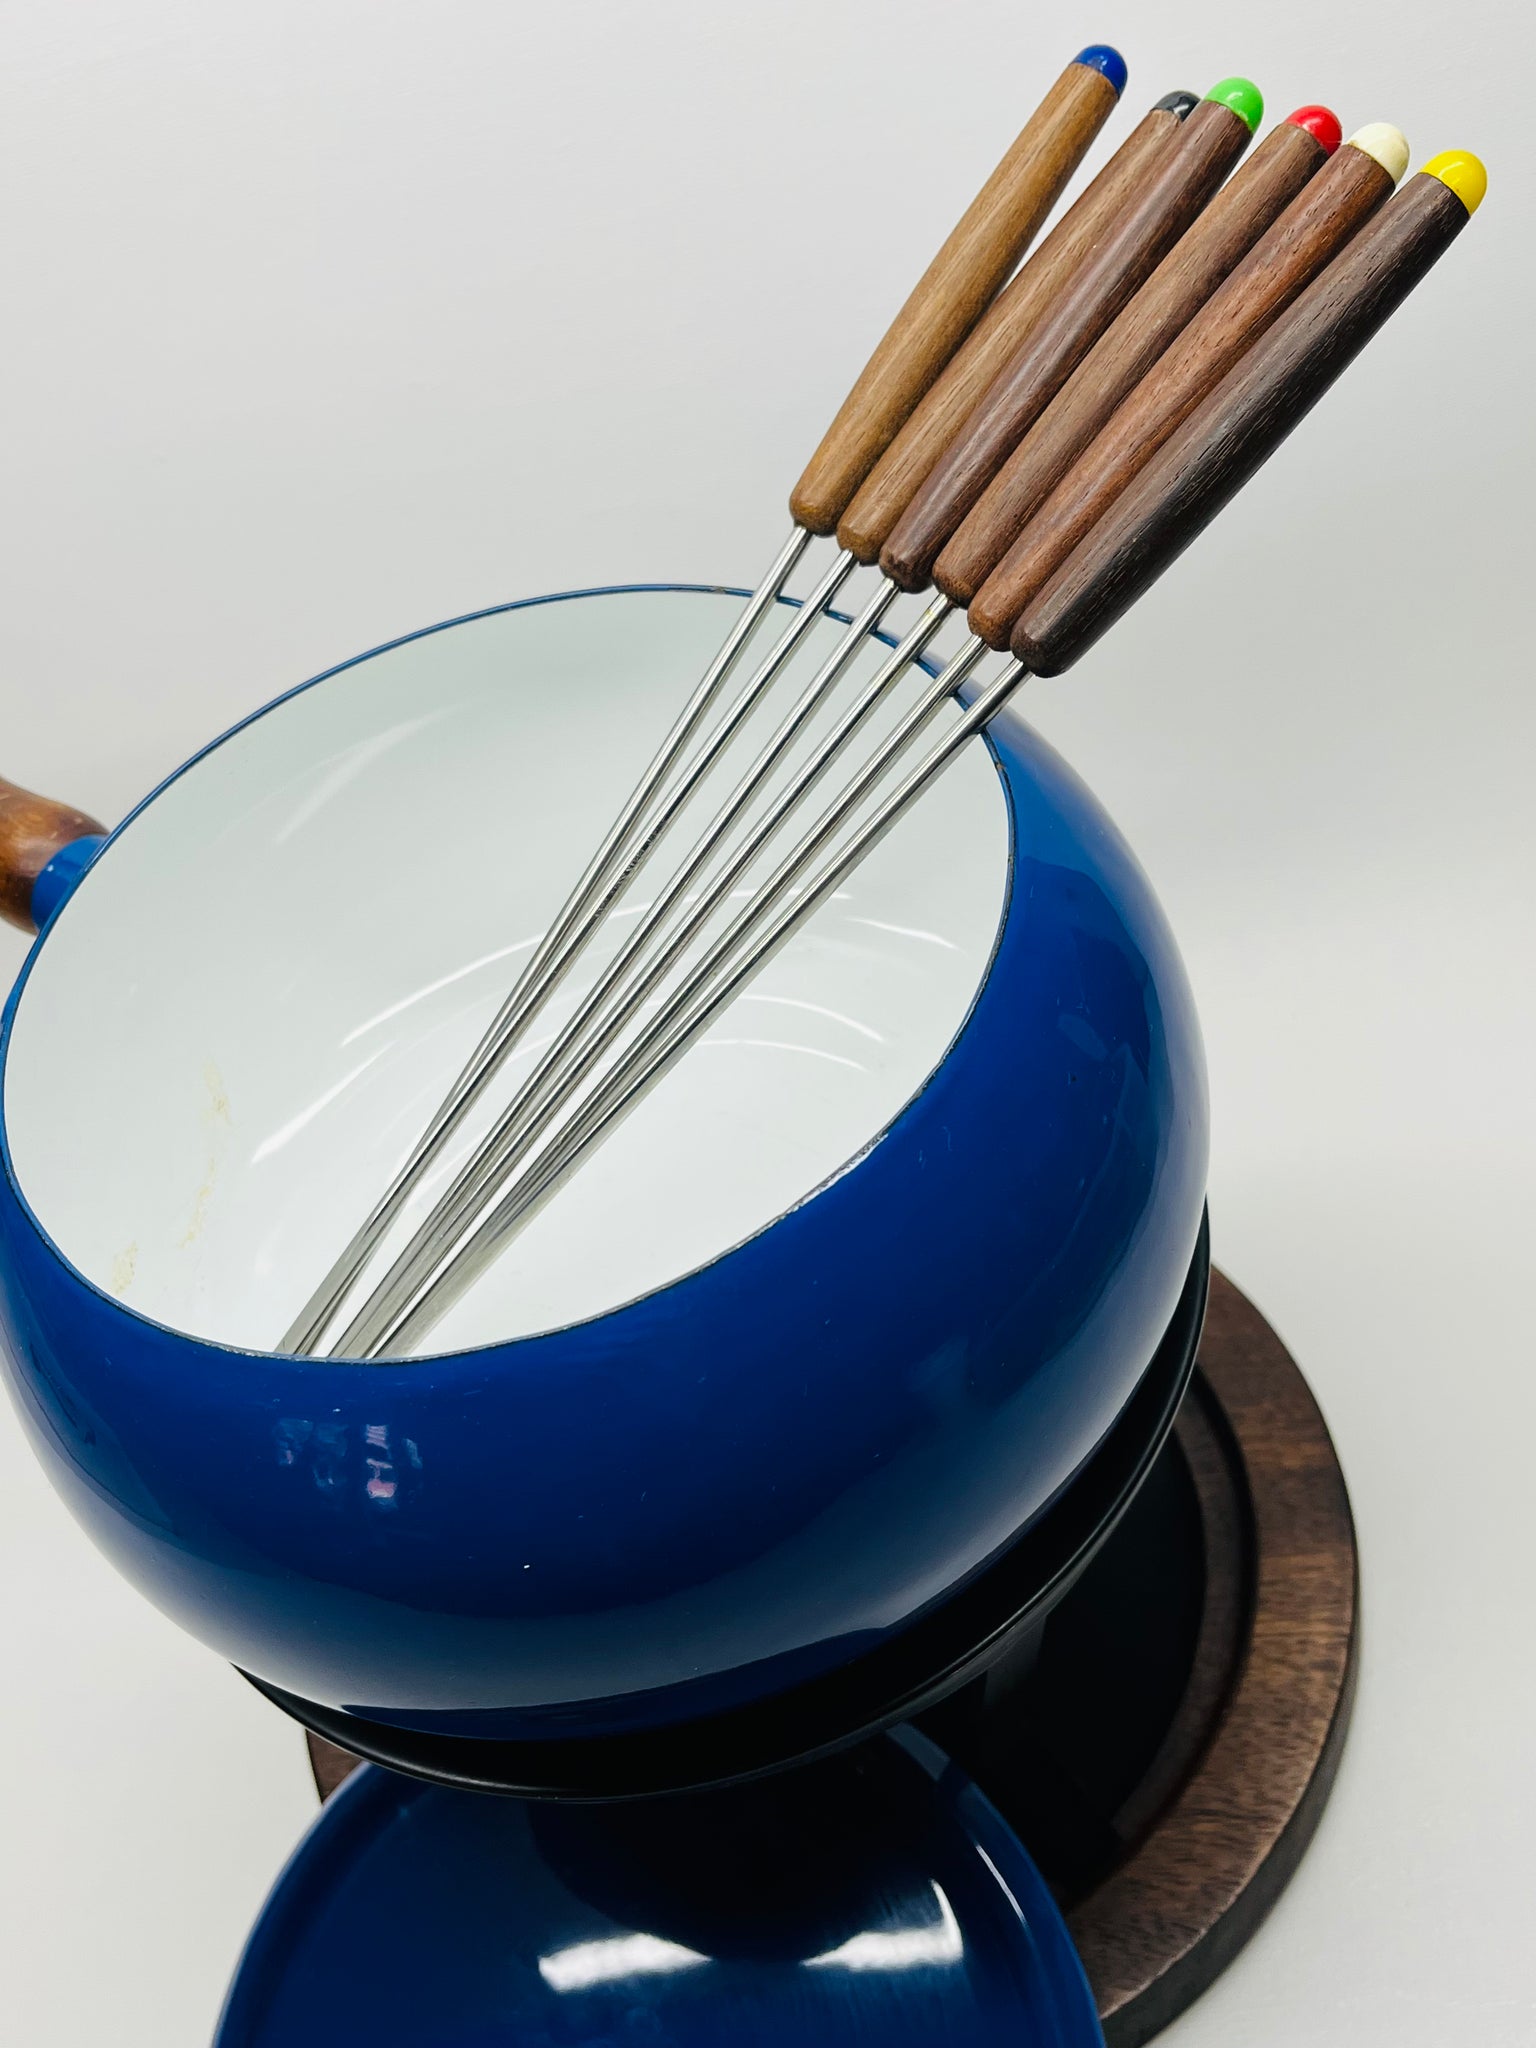 Blue Fondue Pot with Forks